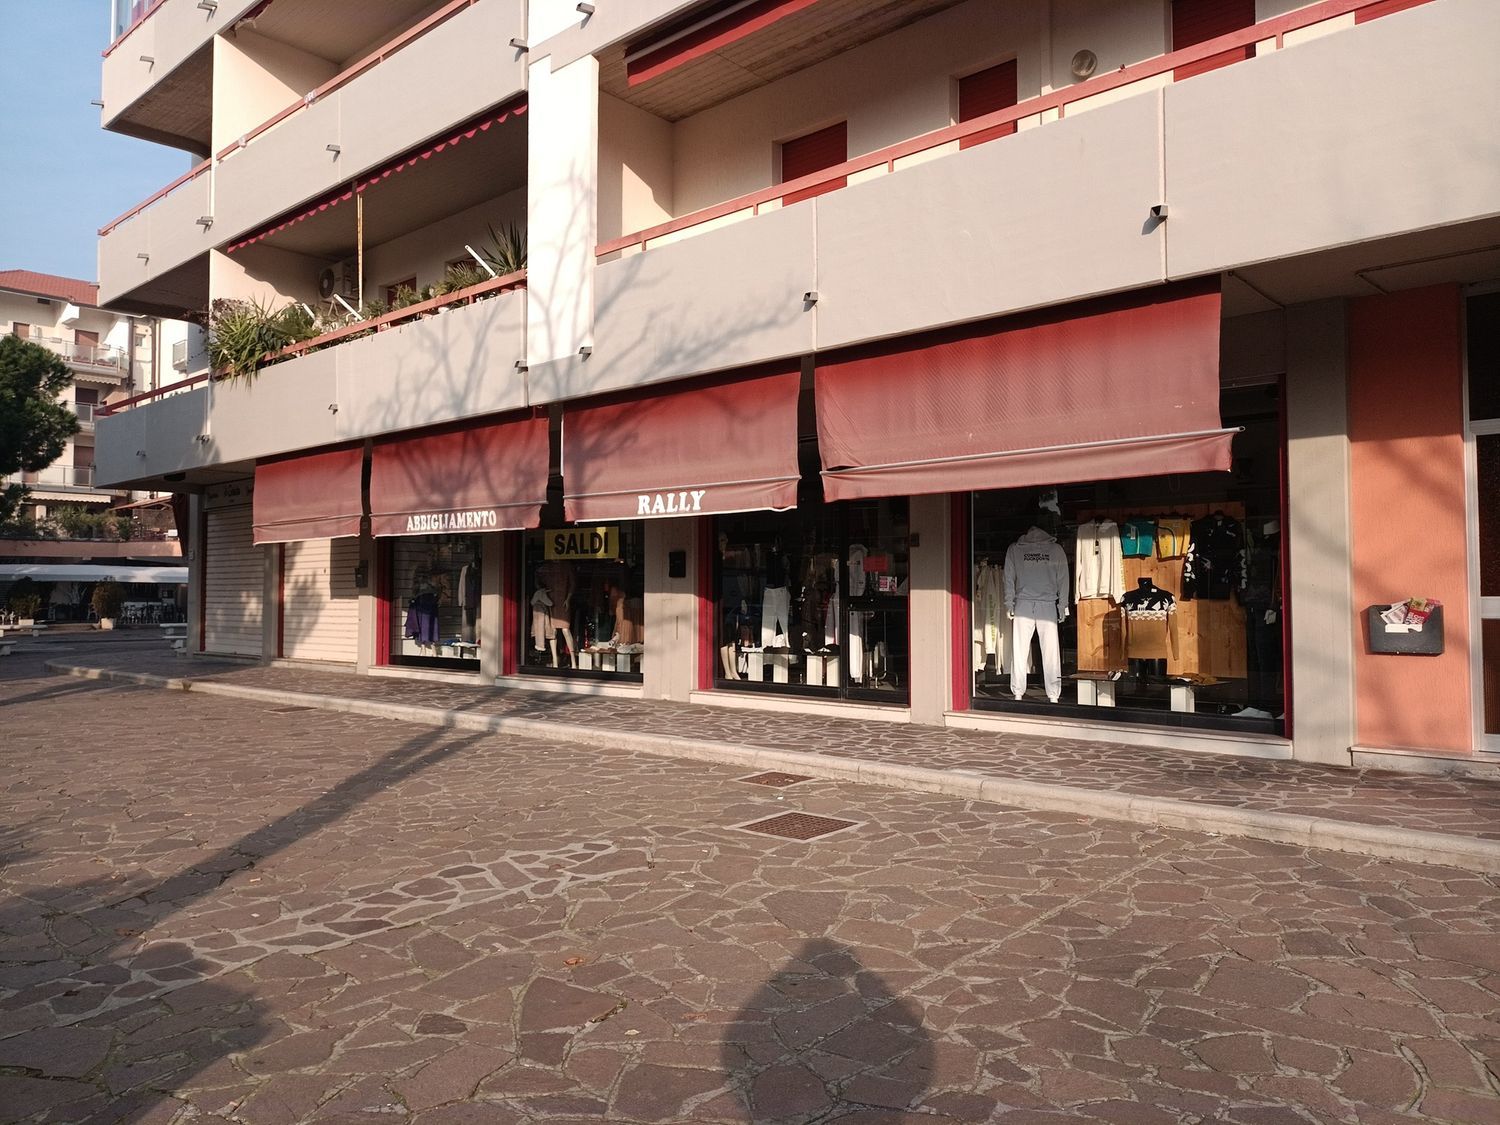 Locale commerciale in vendita in viale virgilio 47, Ravenna